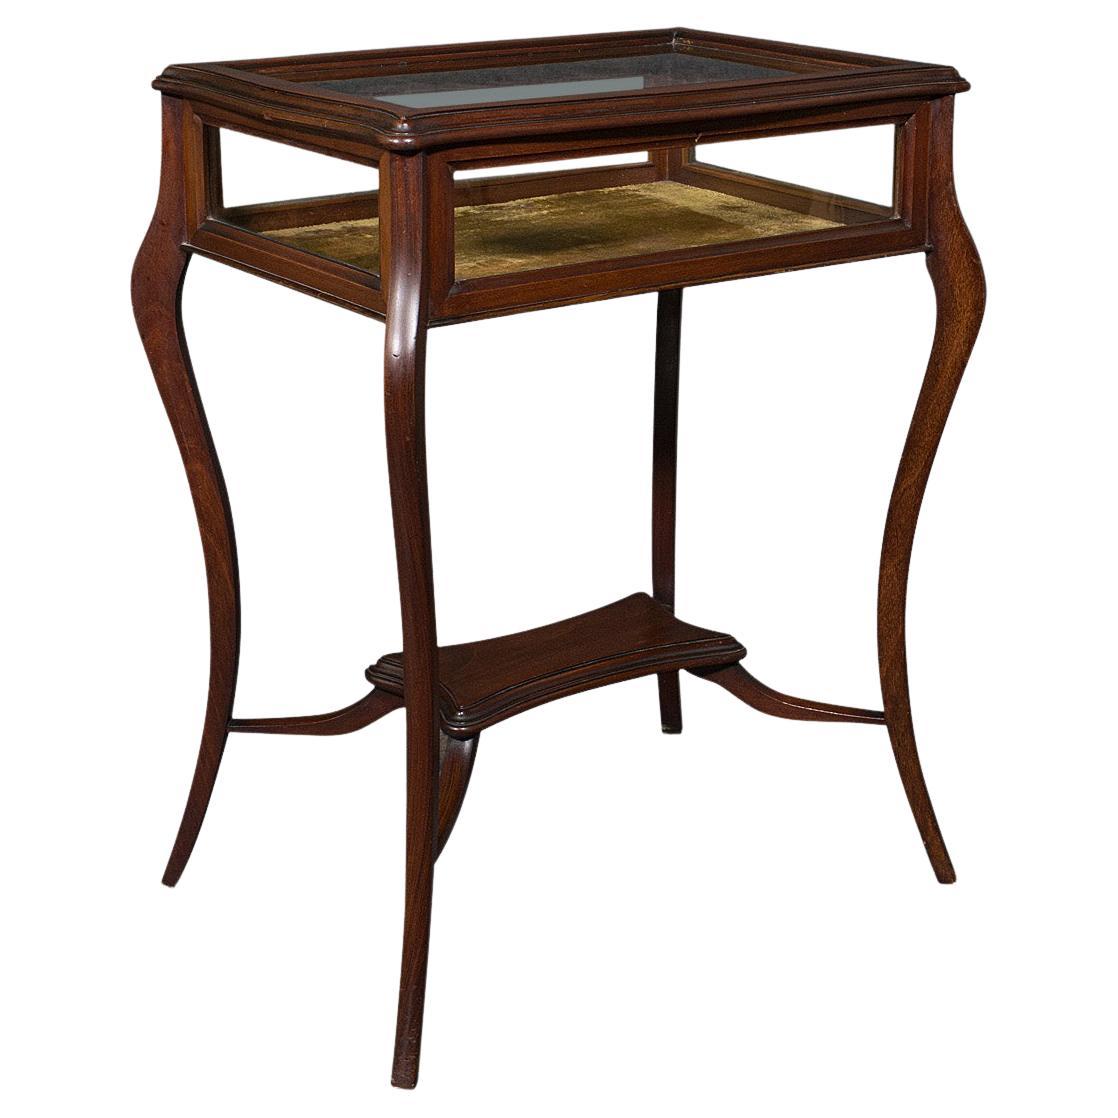 Antique Bijouterie Table, English, Display Case, Showcase, Stand, Edwardian